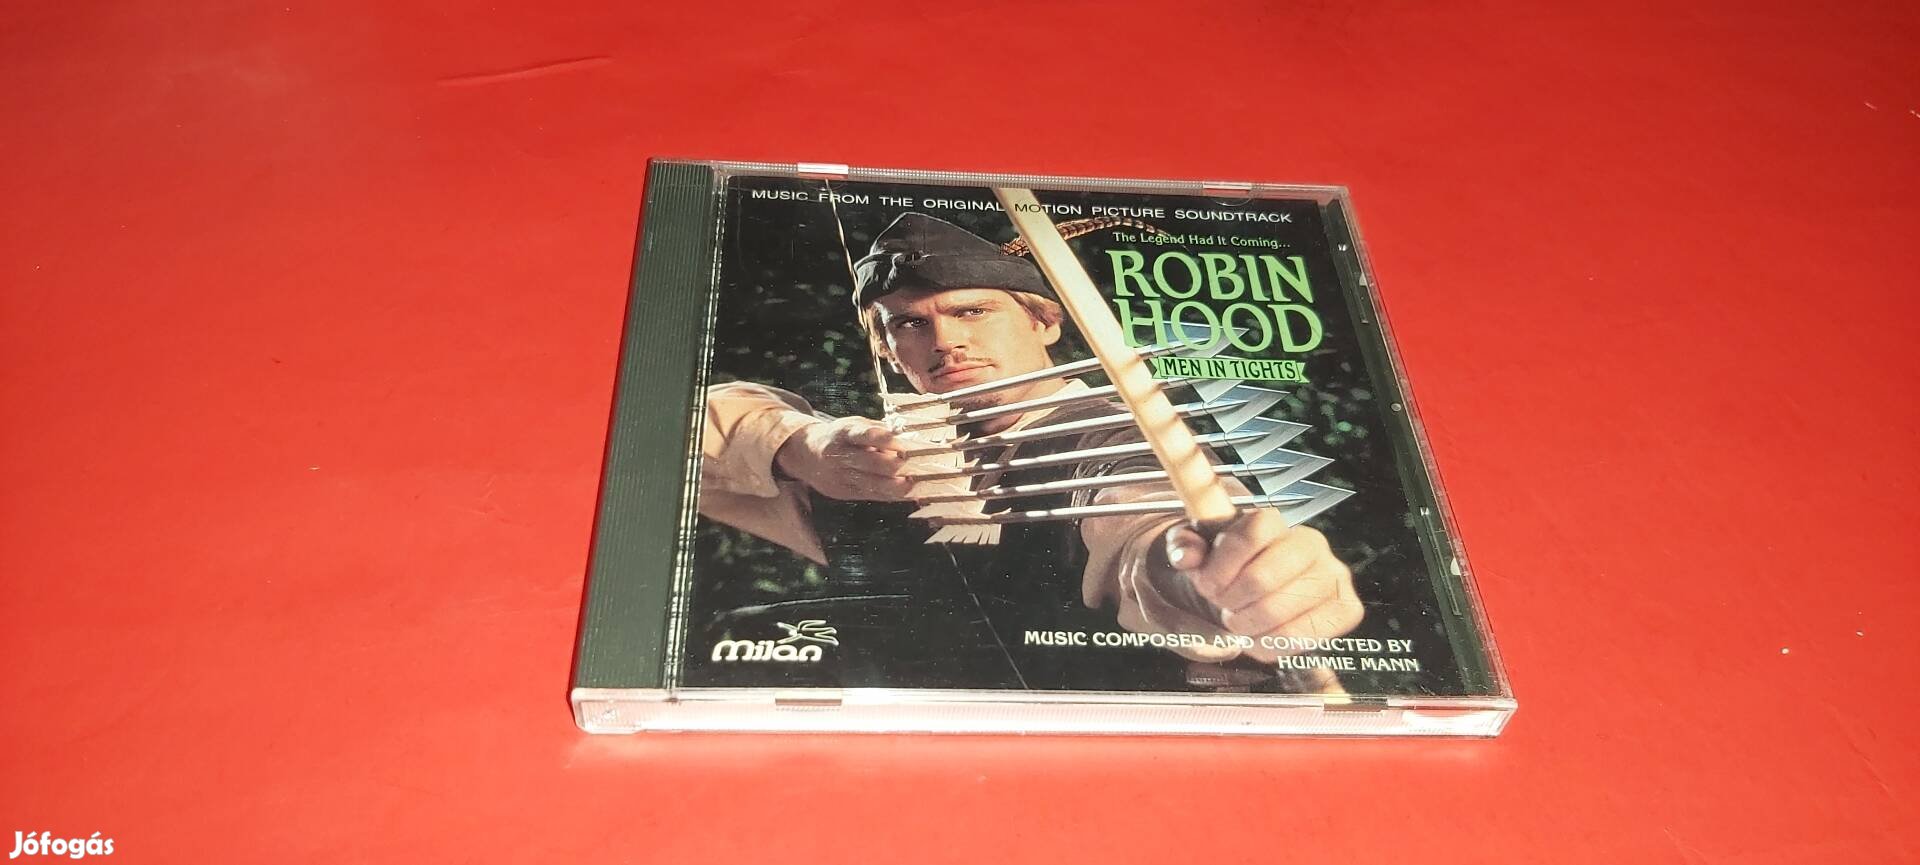 Hummie Mann Robin Hood Men is tights Cd  1993 U.S.A